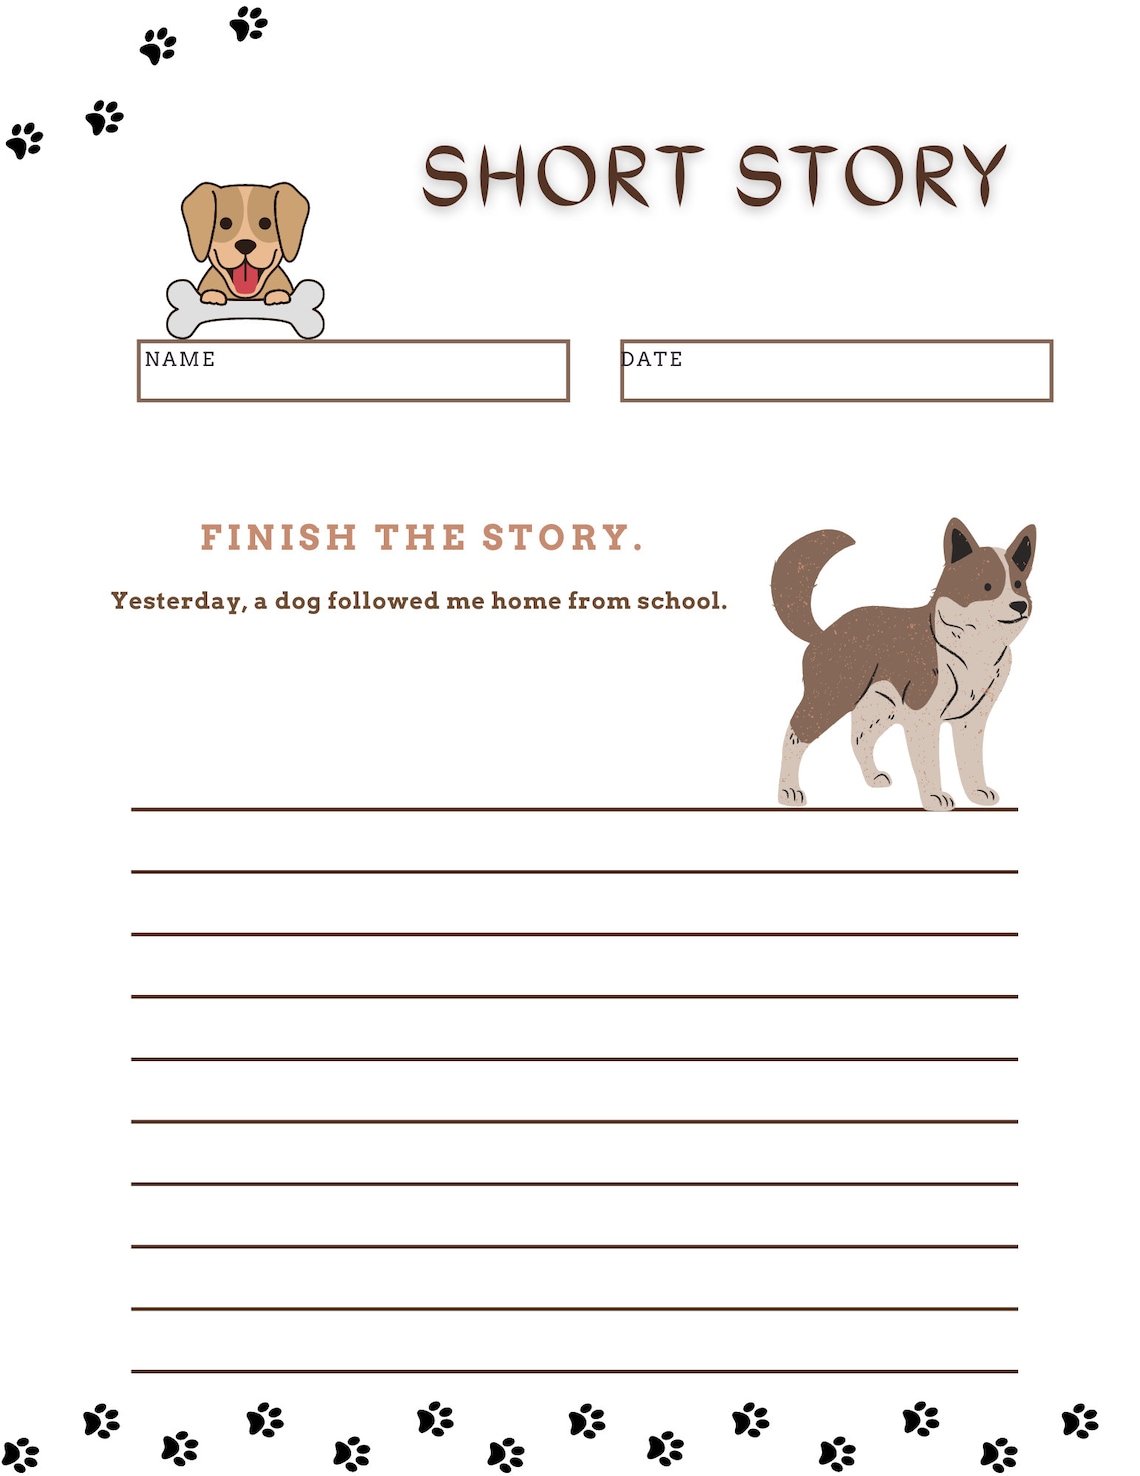 finish-the-story-creative-writing-worksheets-etsy